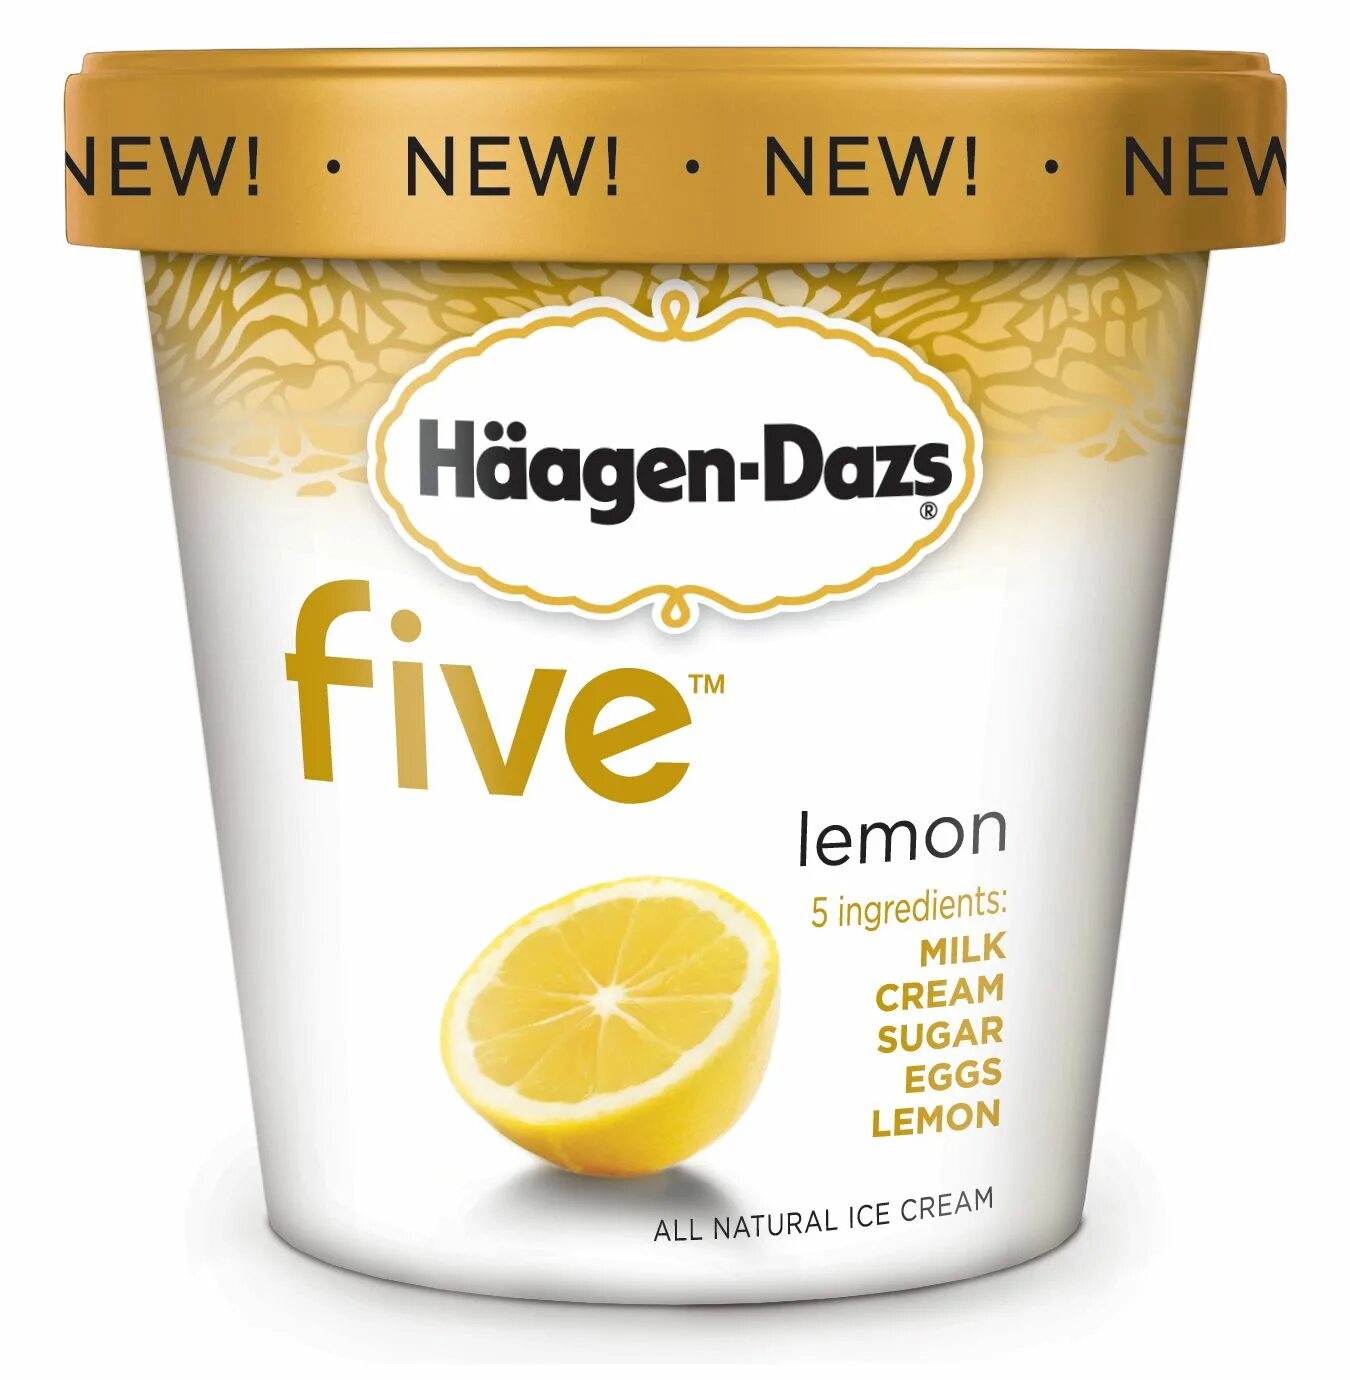 Haagen Dazs Ice Cream ingredients. Крем Sugar. Lemon Ice Cream Packaging. Sugar High крем. Файв лемонс групп